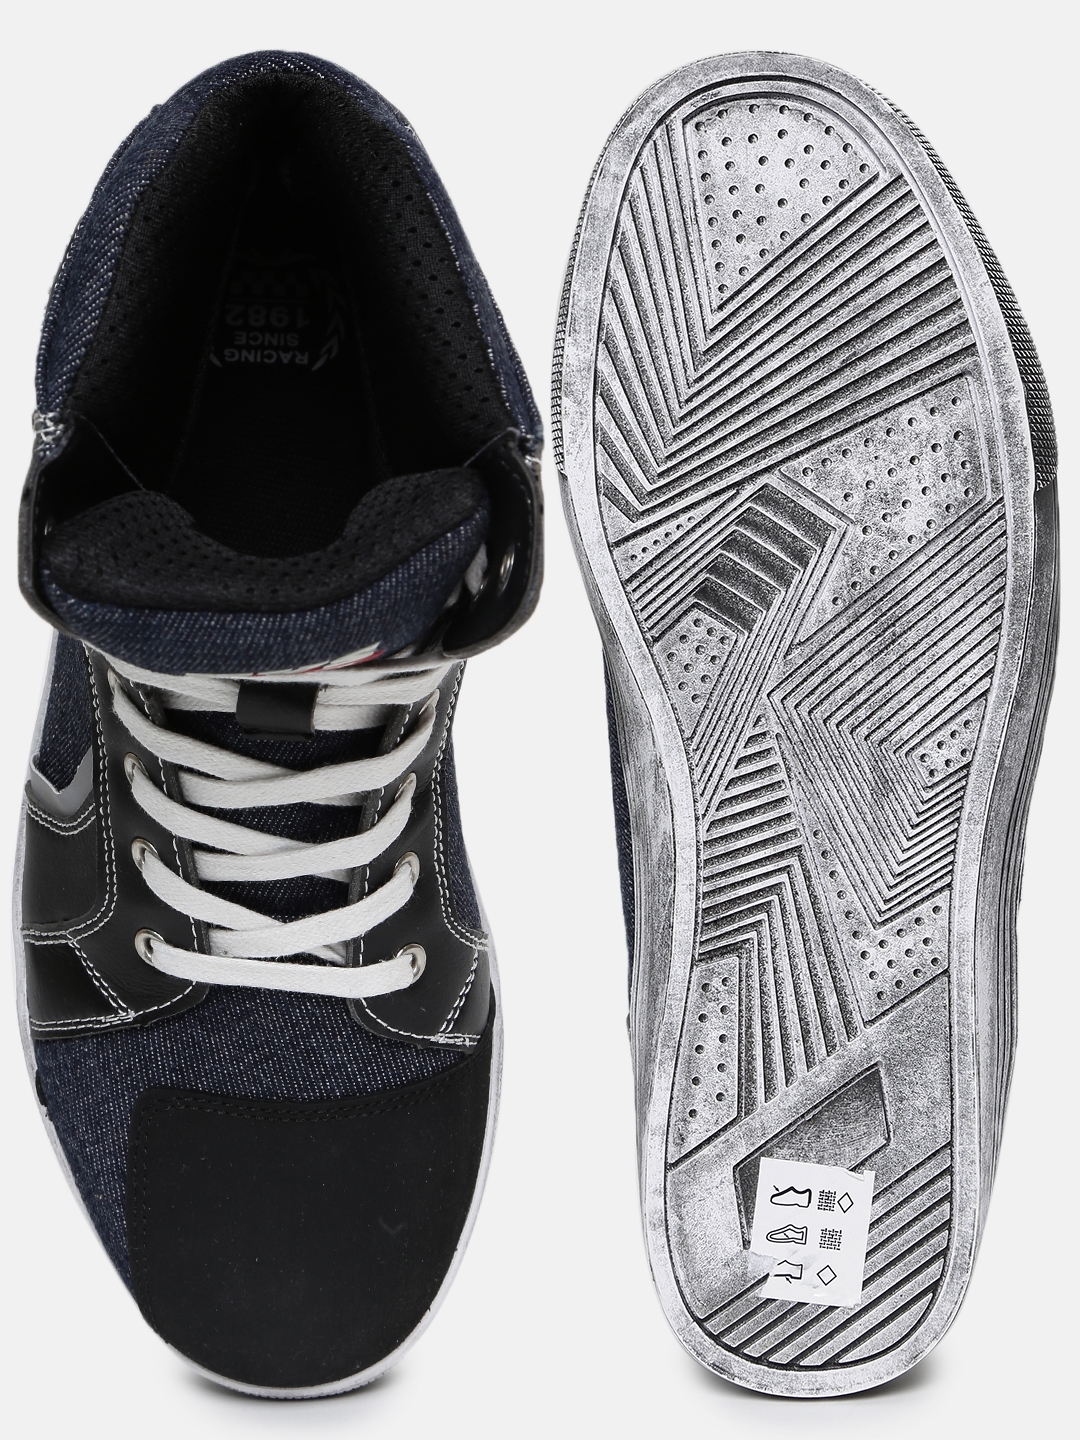 LEVIS 51791101A Black Denim Canvas Skate Hi-Top Shoes Sneakers 13 | eBay